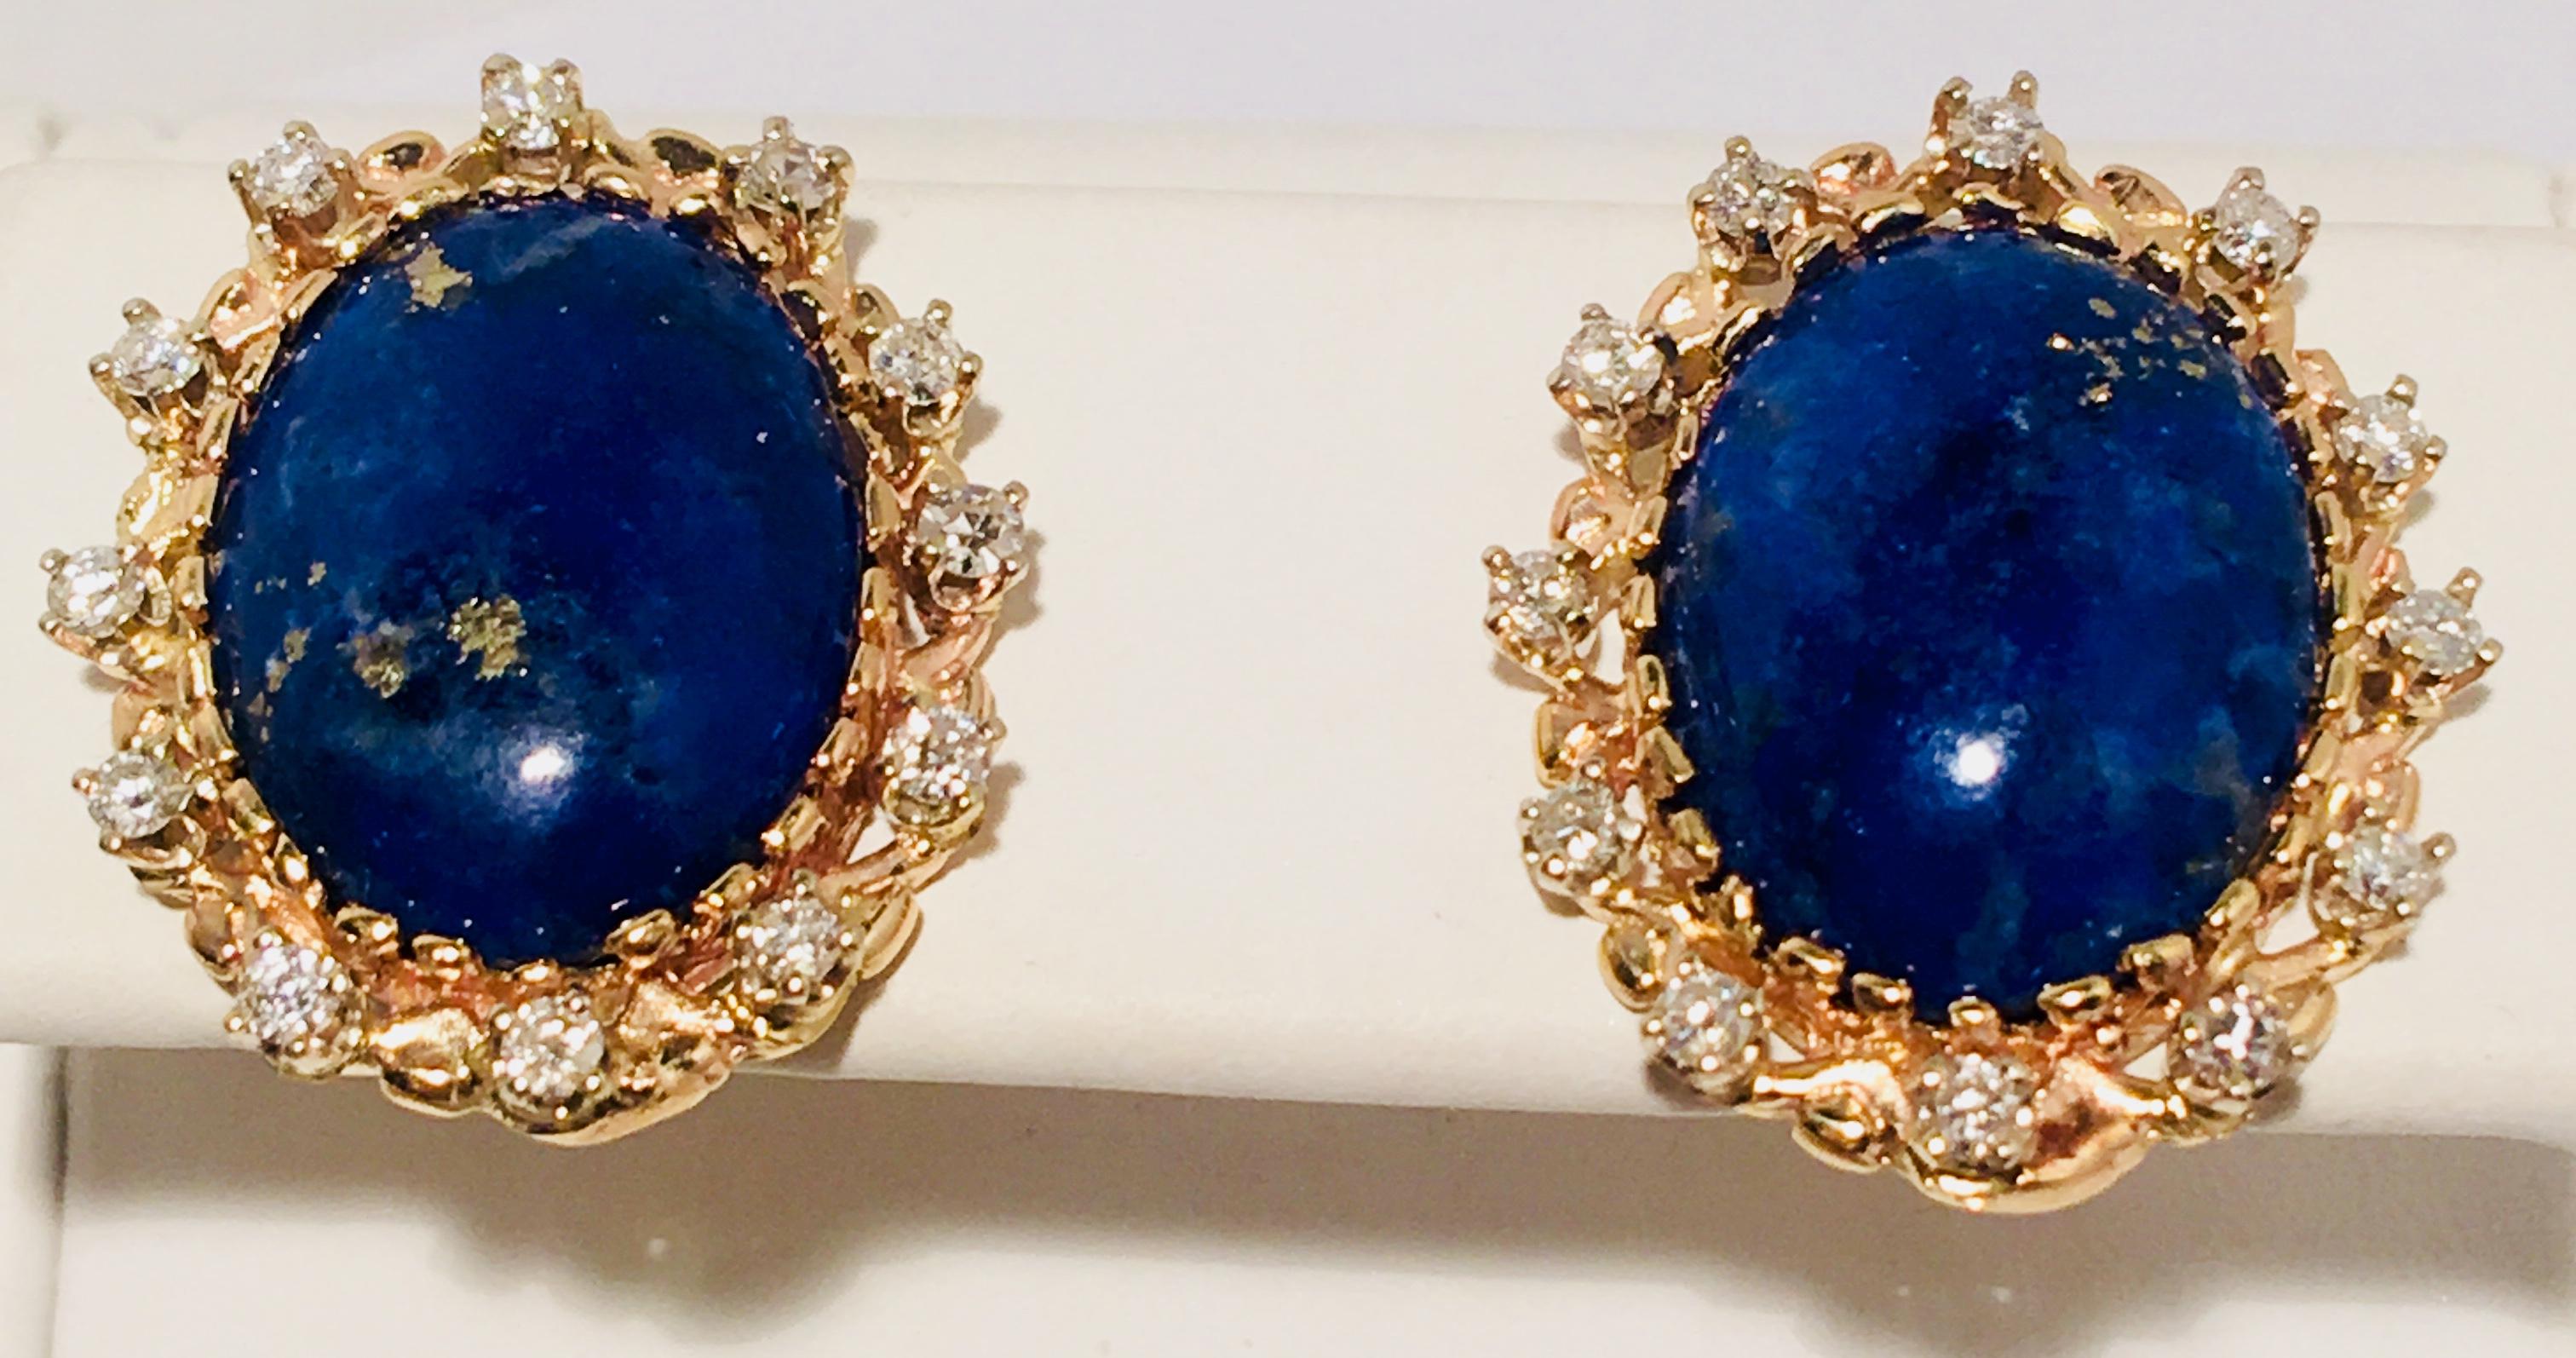 Vivid Blue Large Oval Lapis Lazuli Diamond Halo 18 Karat Gold Post Earrings (Zeitgenössisch)